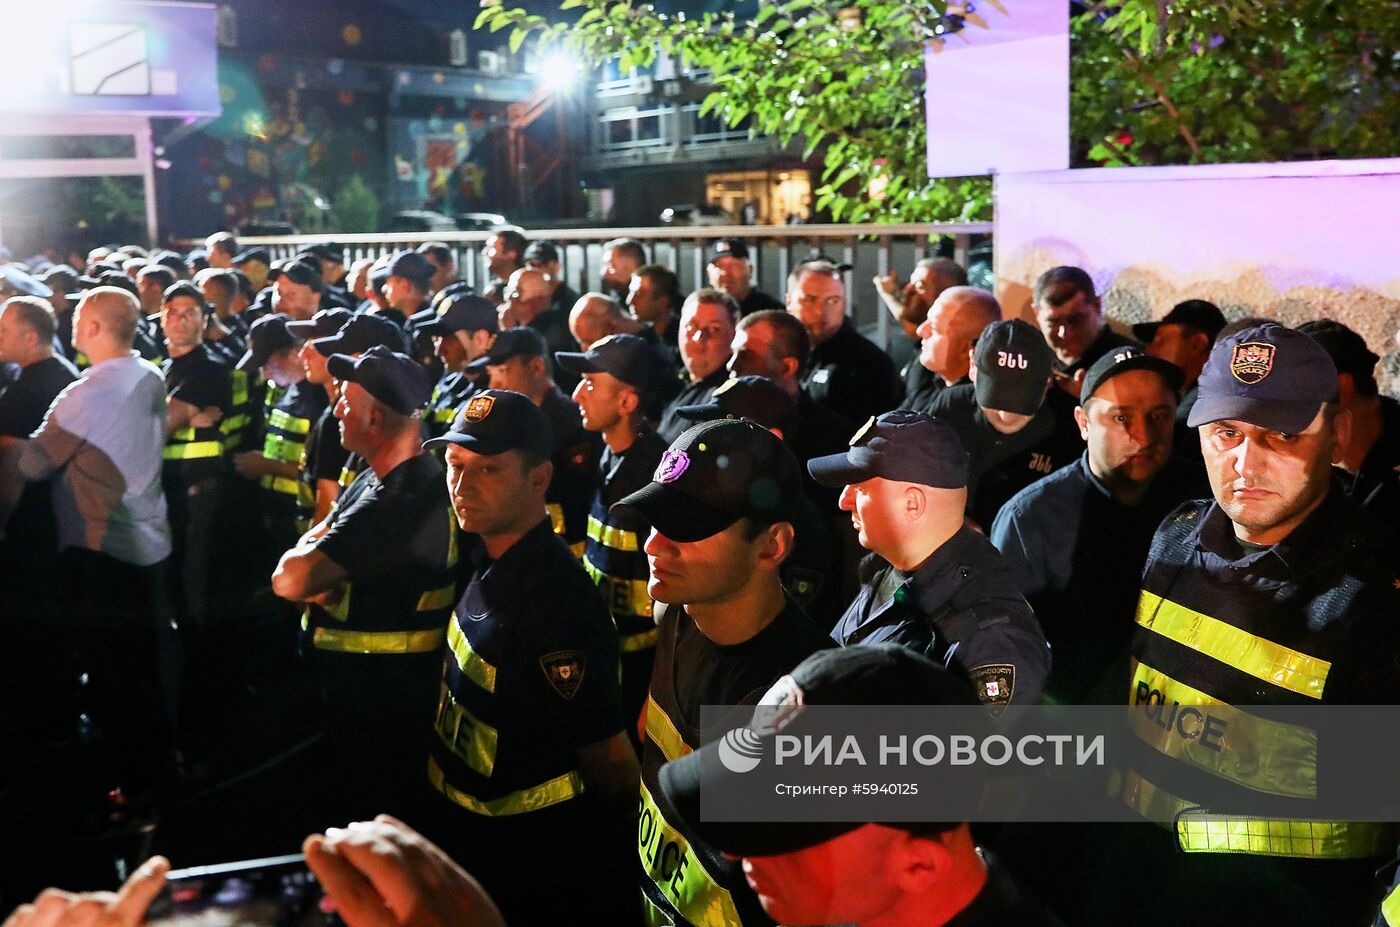 Акция против телеканала "Рустави 2" в Тбилиси